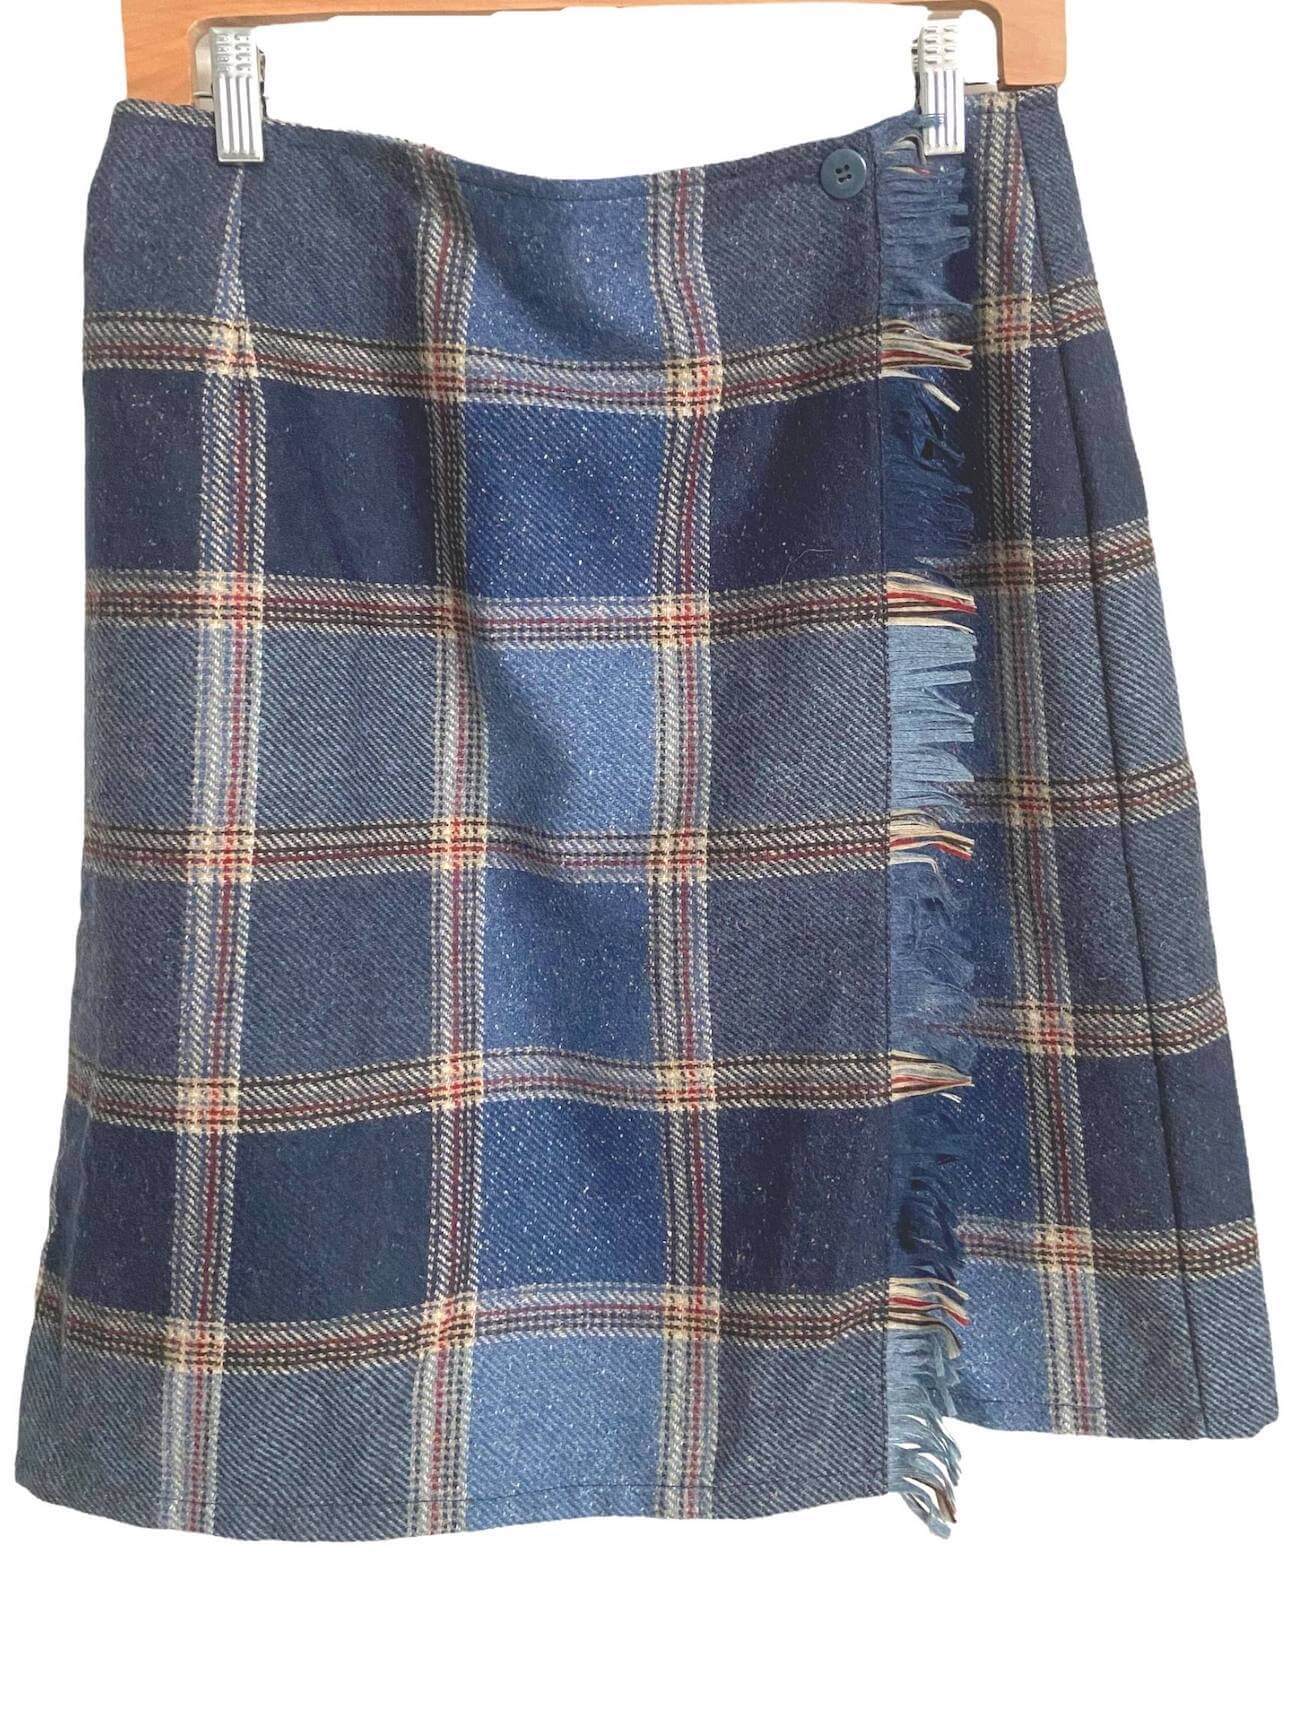 Soft Autumn LIZ CLAIBORNE blue plaid wool skirt